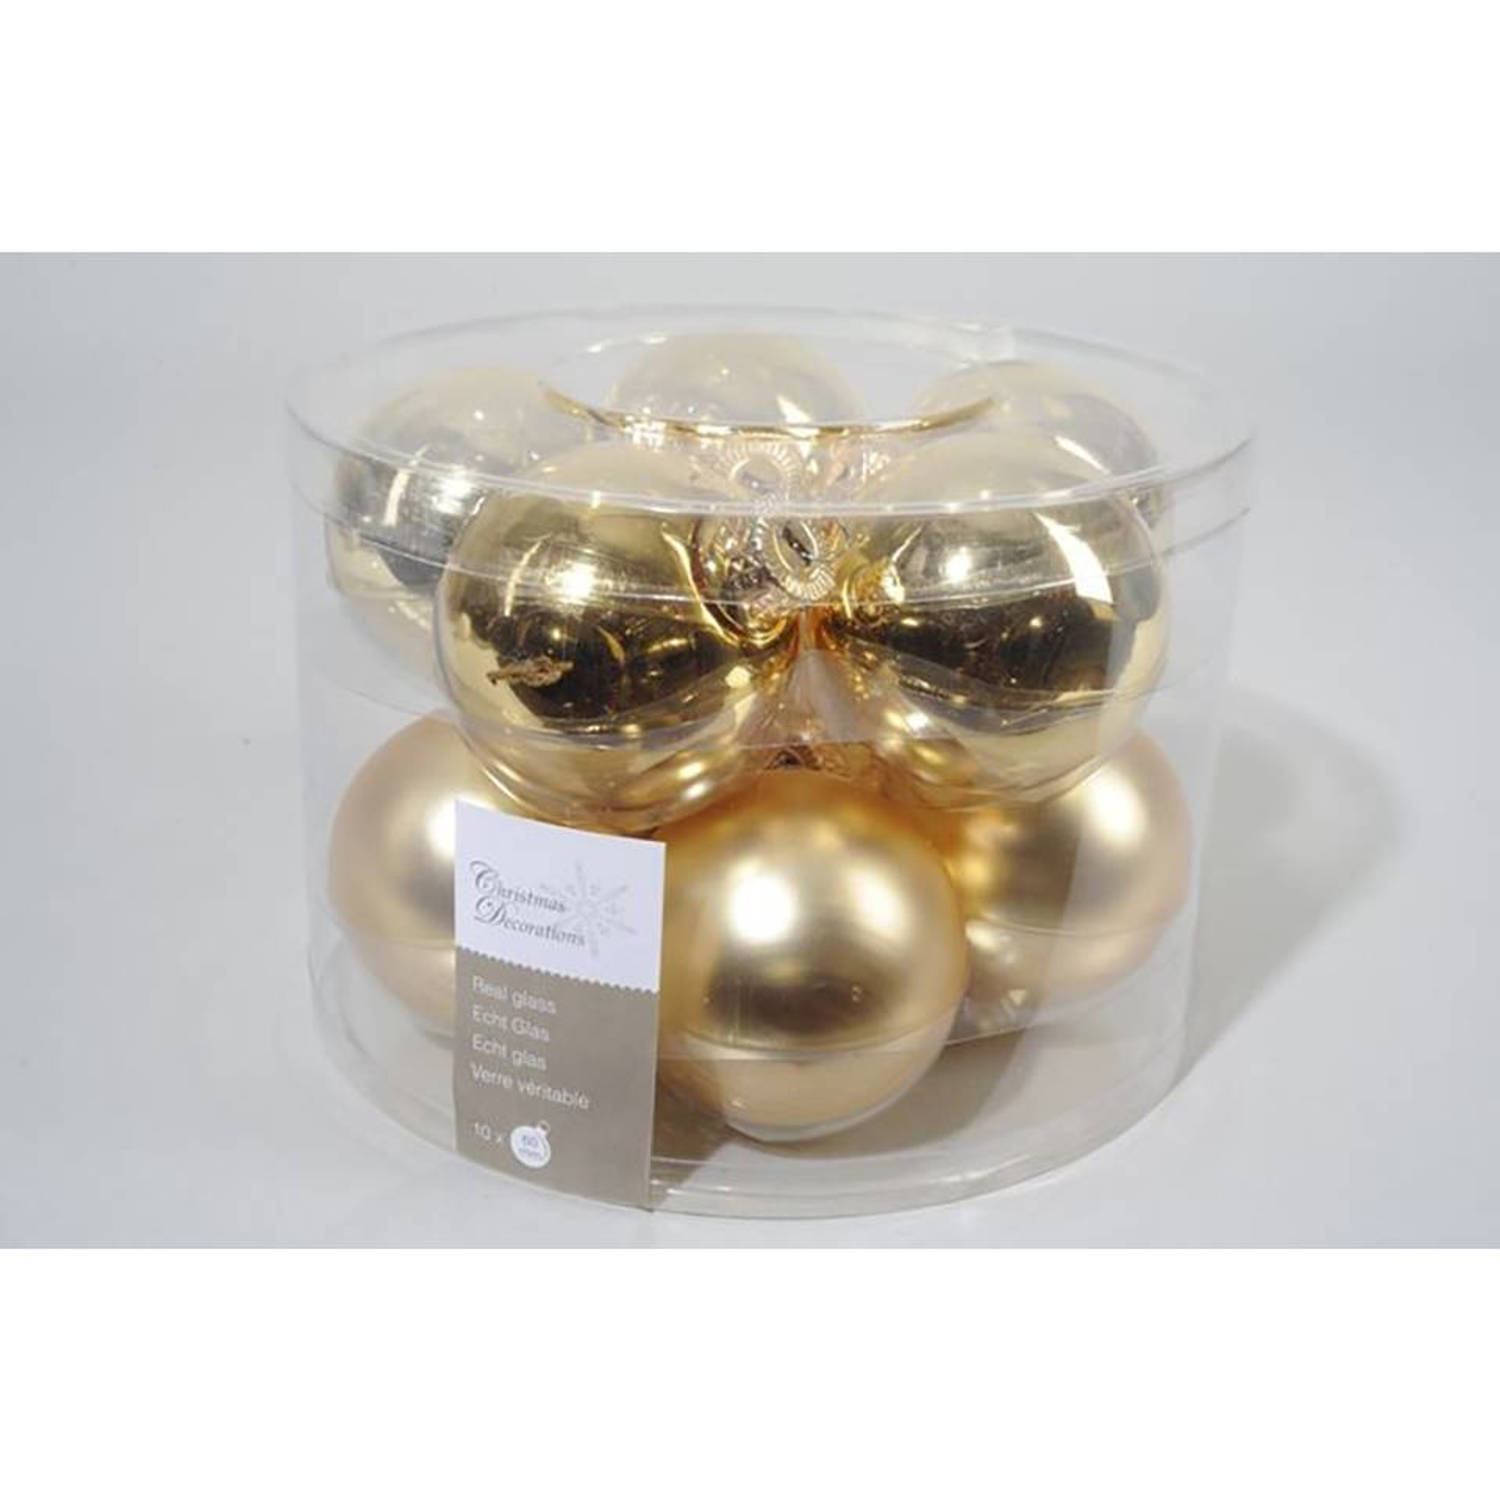 Kerstballen glas licht goud 6cm 10st kerstartikelen